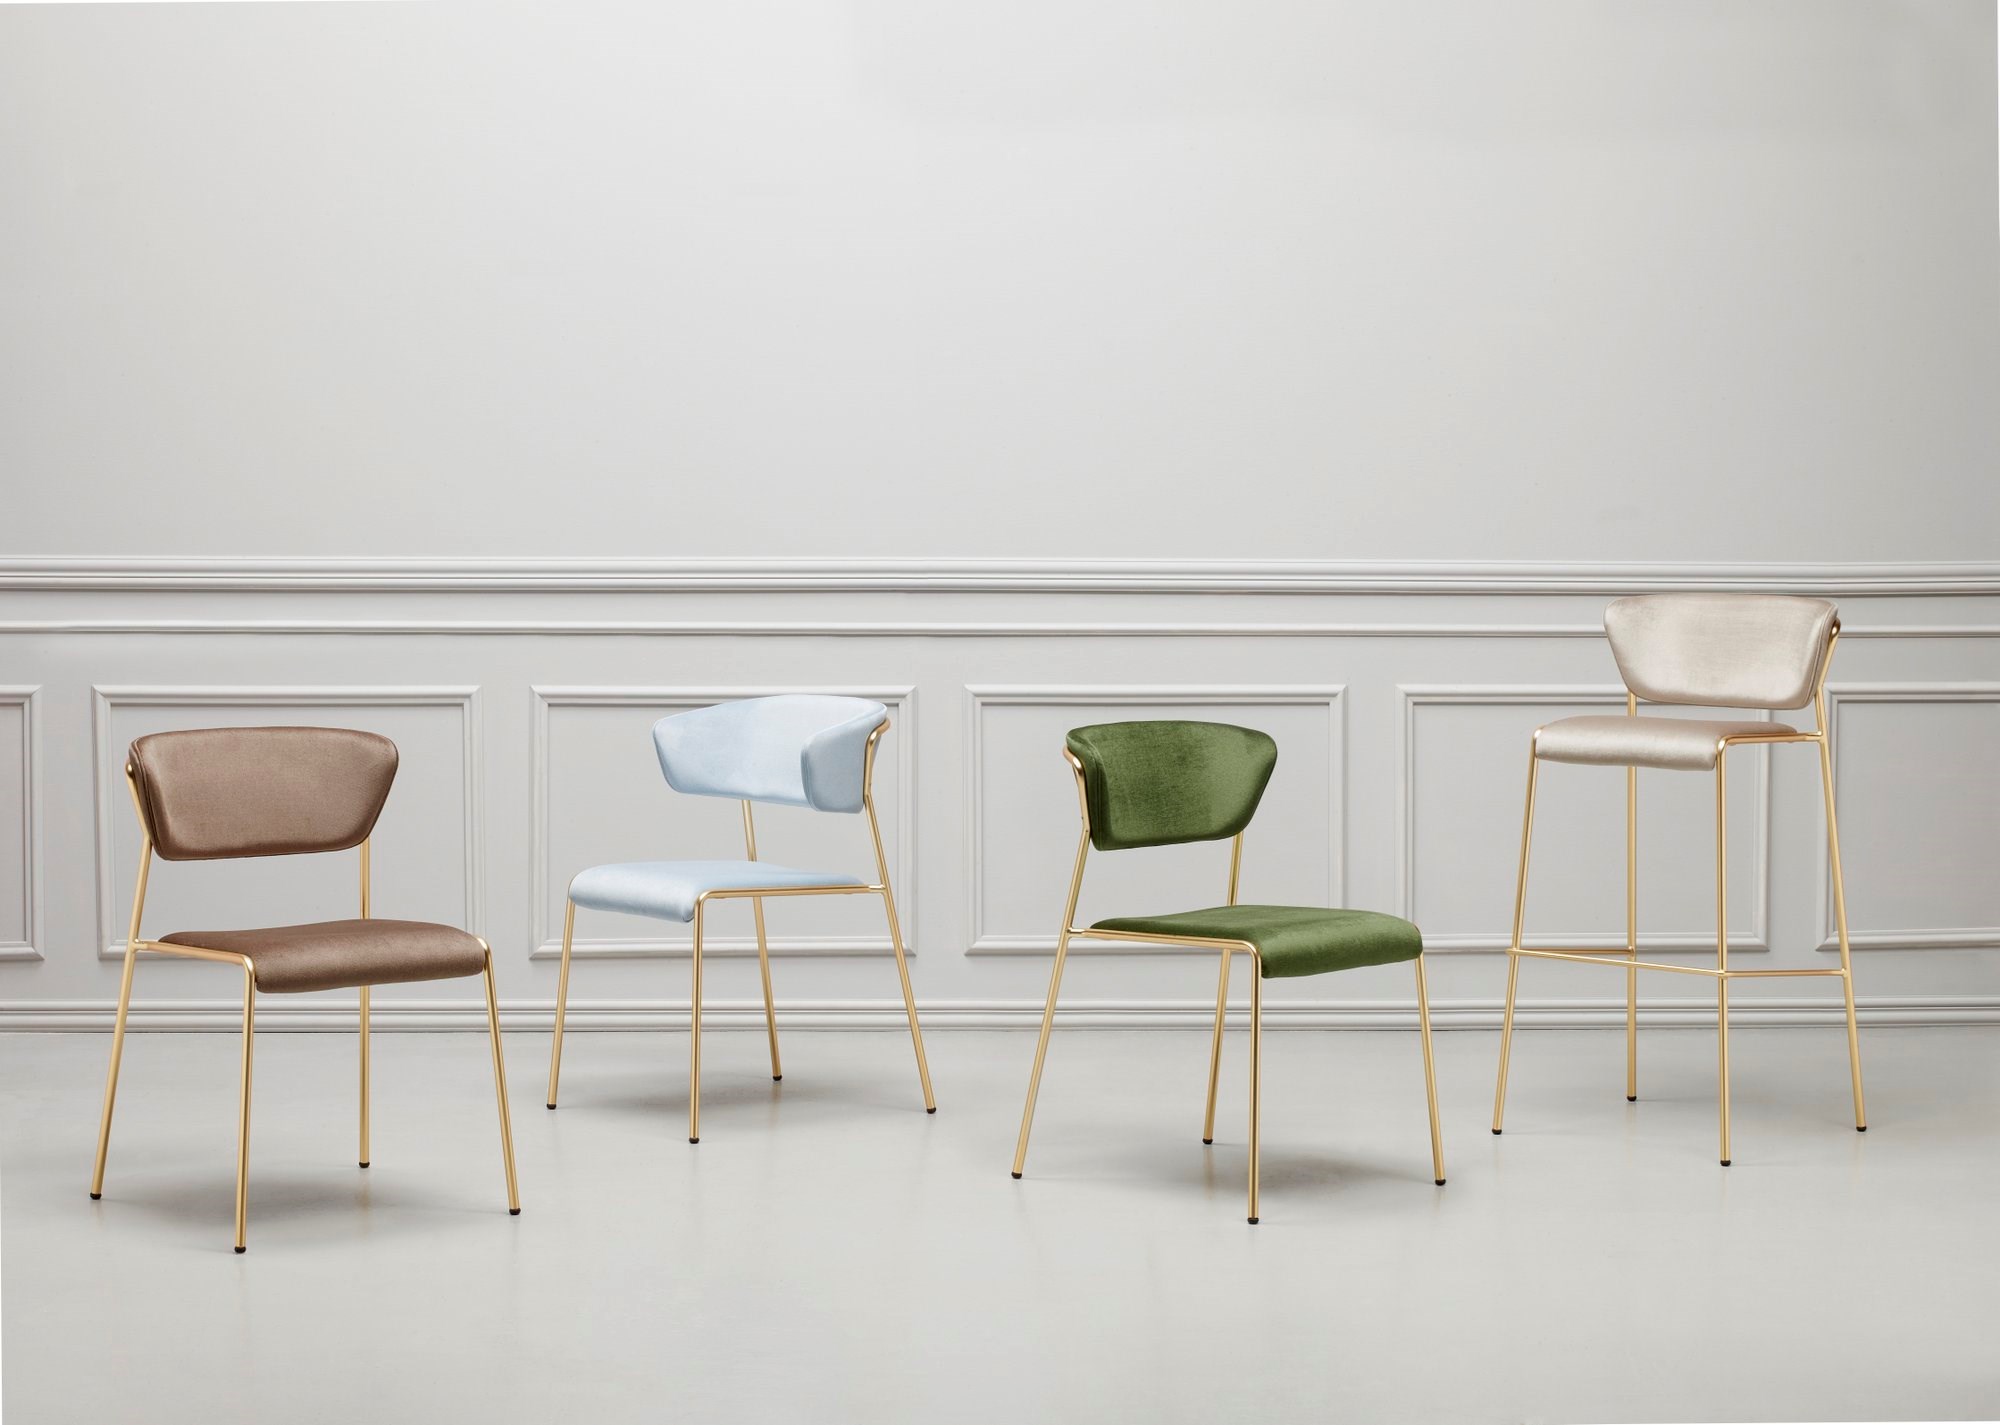 五金铁烤漆不锈钢电镀弯板软包 高脚吧椅 SCAB DESIGN LISA  High stool  Marcello Ziliani